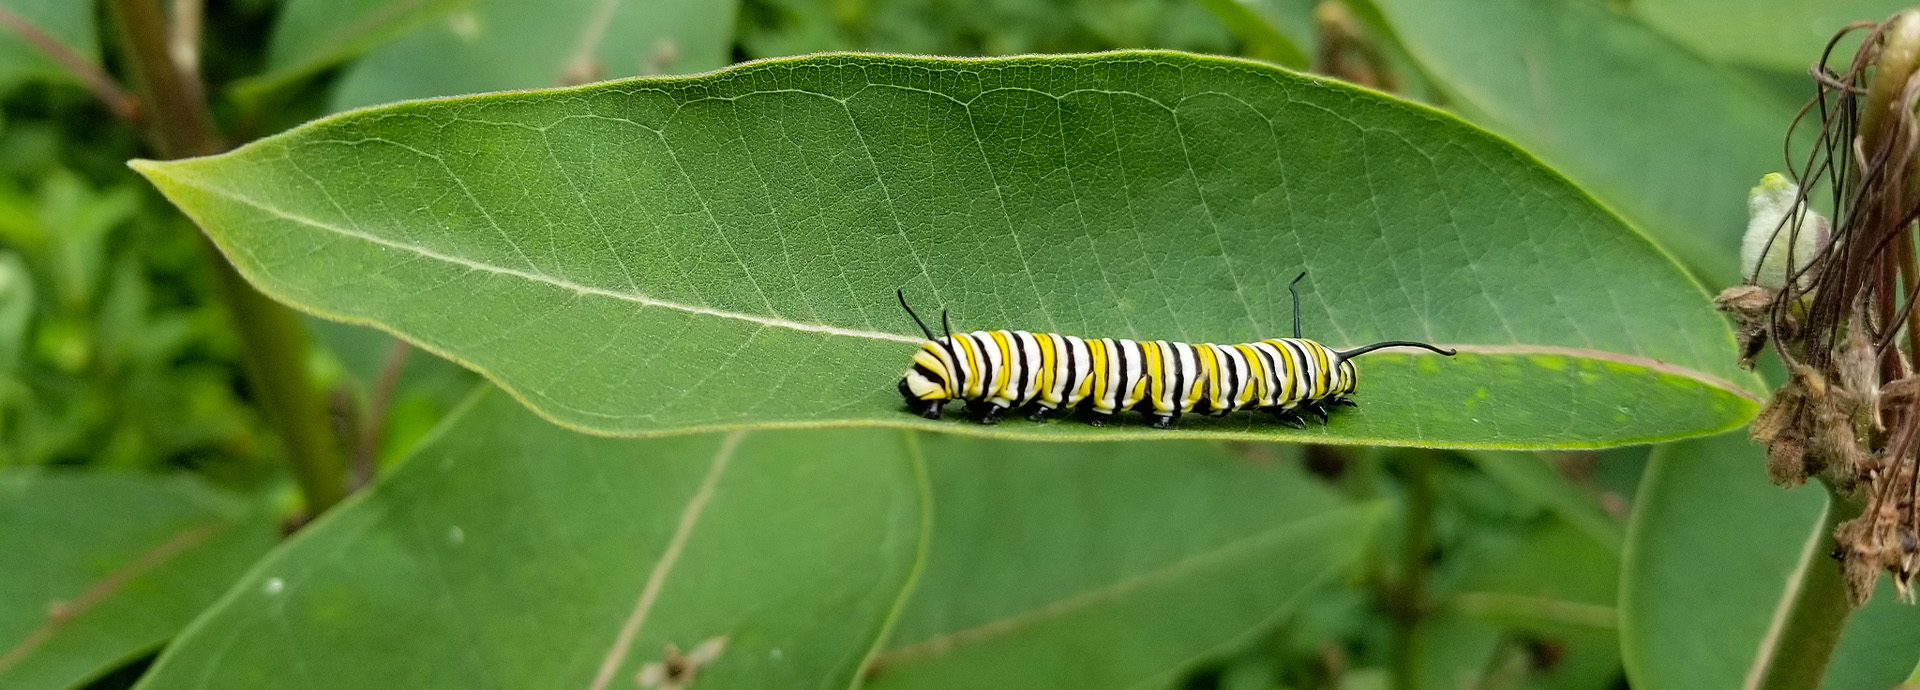 Slideshow Image - A Monarch caterpillar on a Milkweed leaf